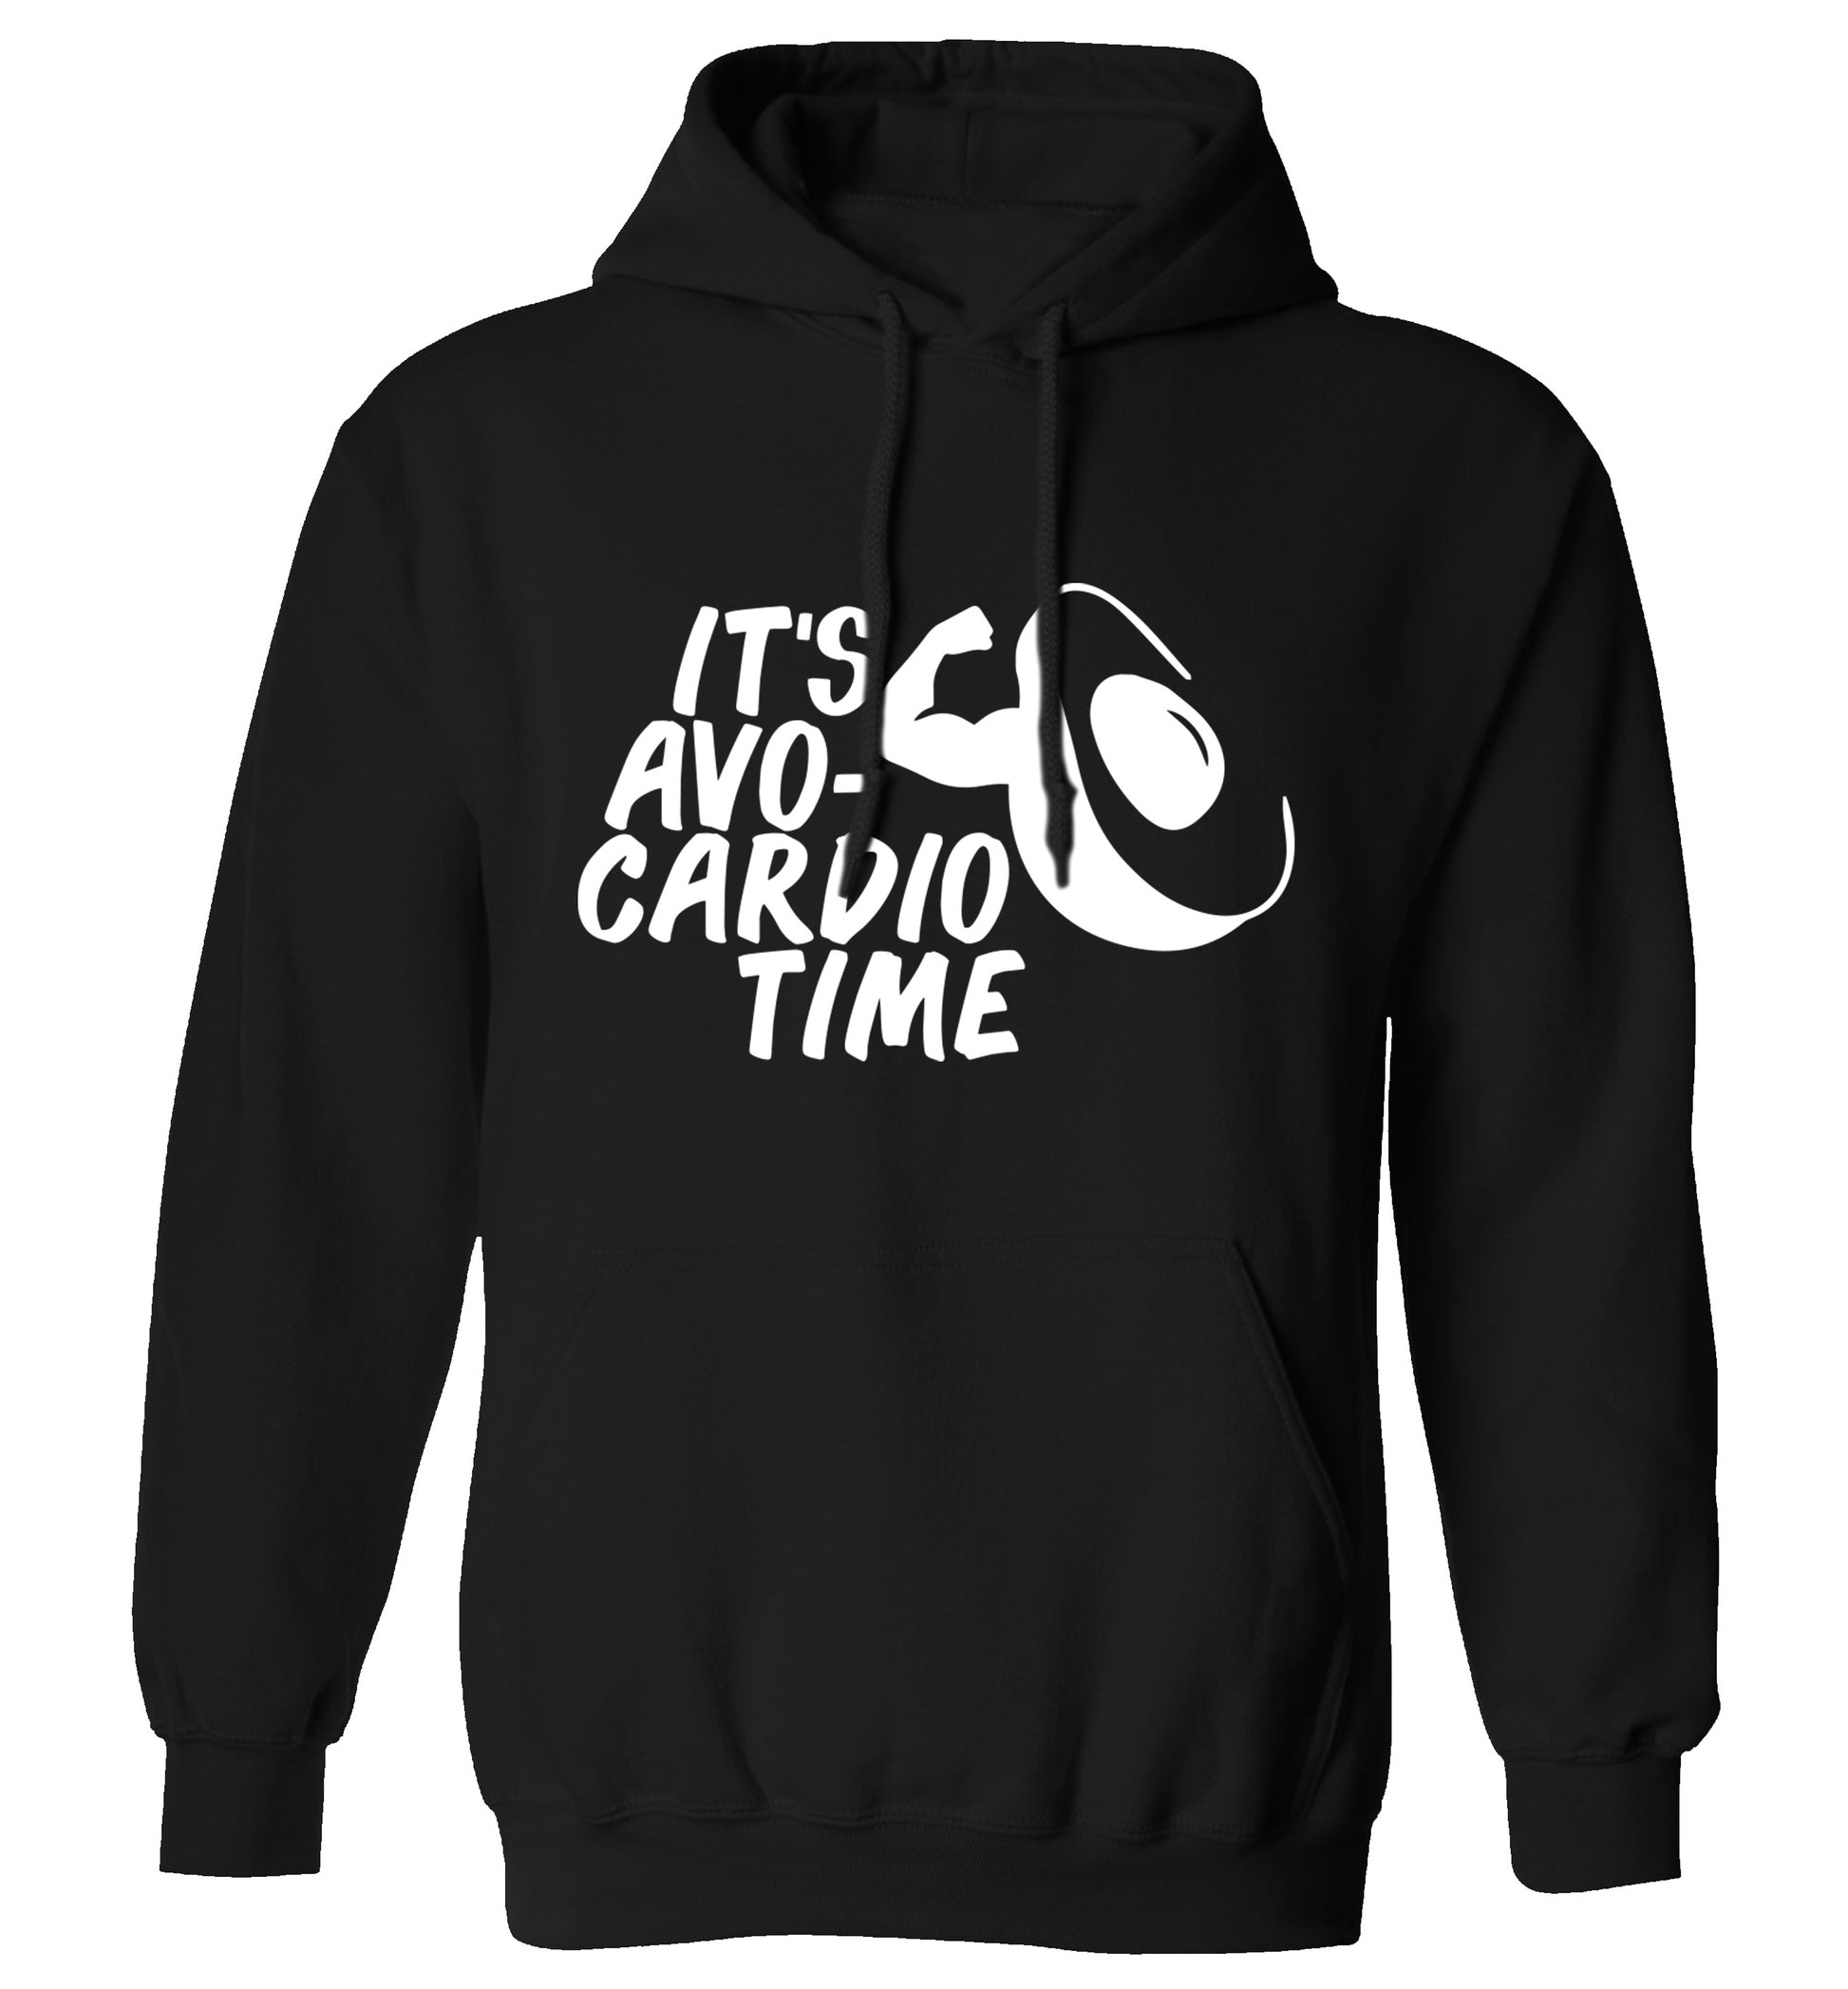 It's avo-cardio time adults unisex black hoodie 2XL